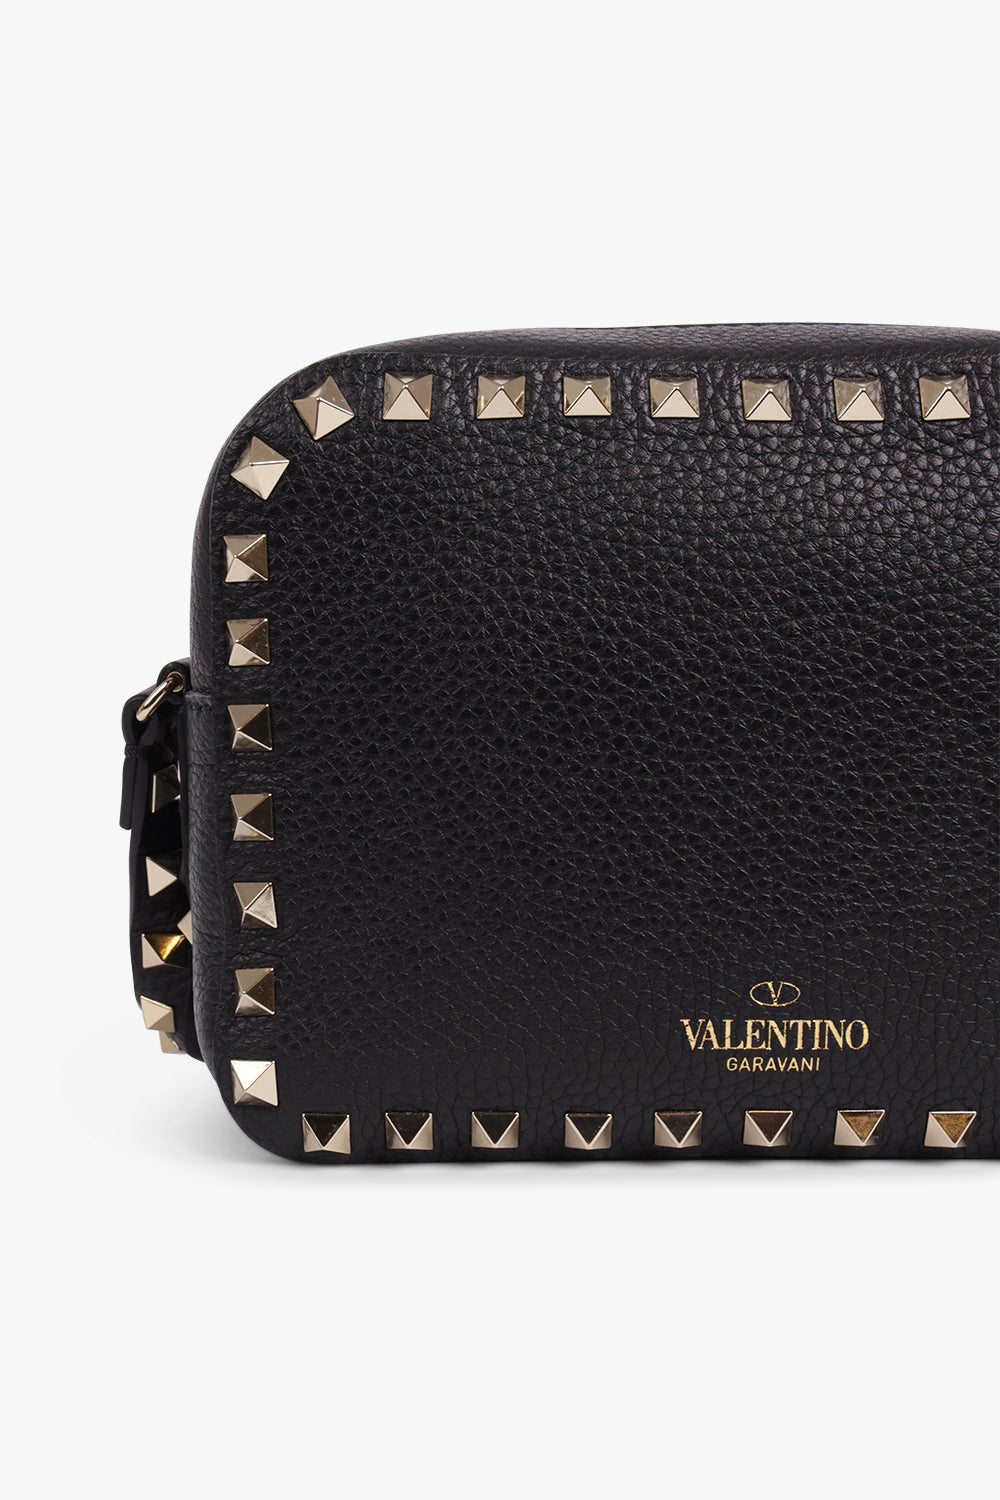 Valentino Women's Valentino black tote bag 1956POSS1R406N, women's black  purse black women's purse+T41 Valentino tote bag - 1957poss1ij06n - Bags  Valentino - Women Valentino